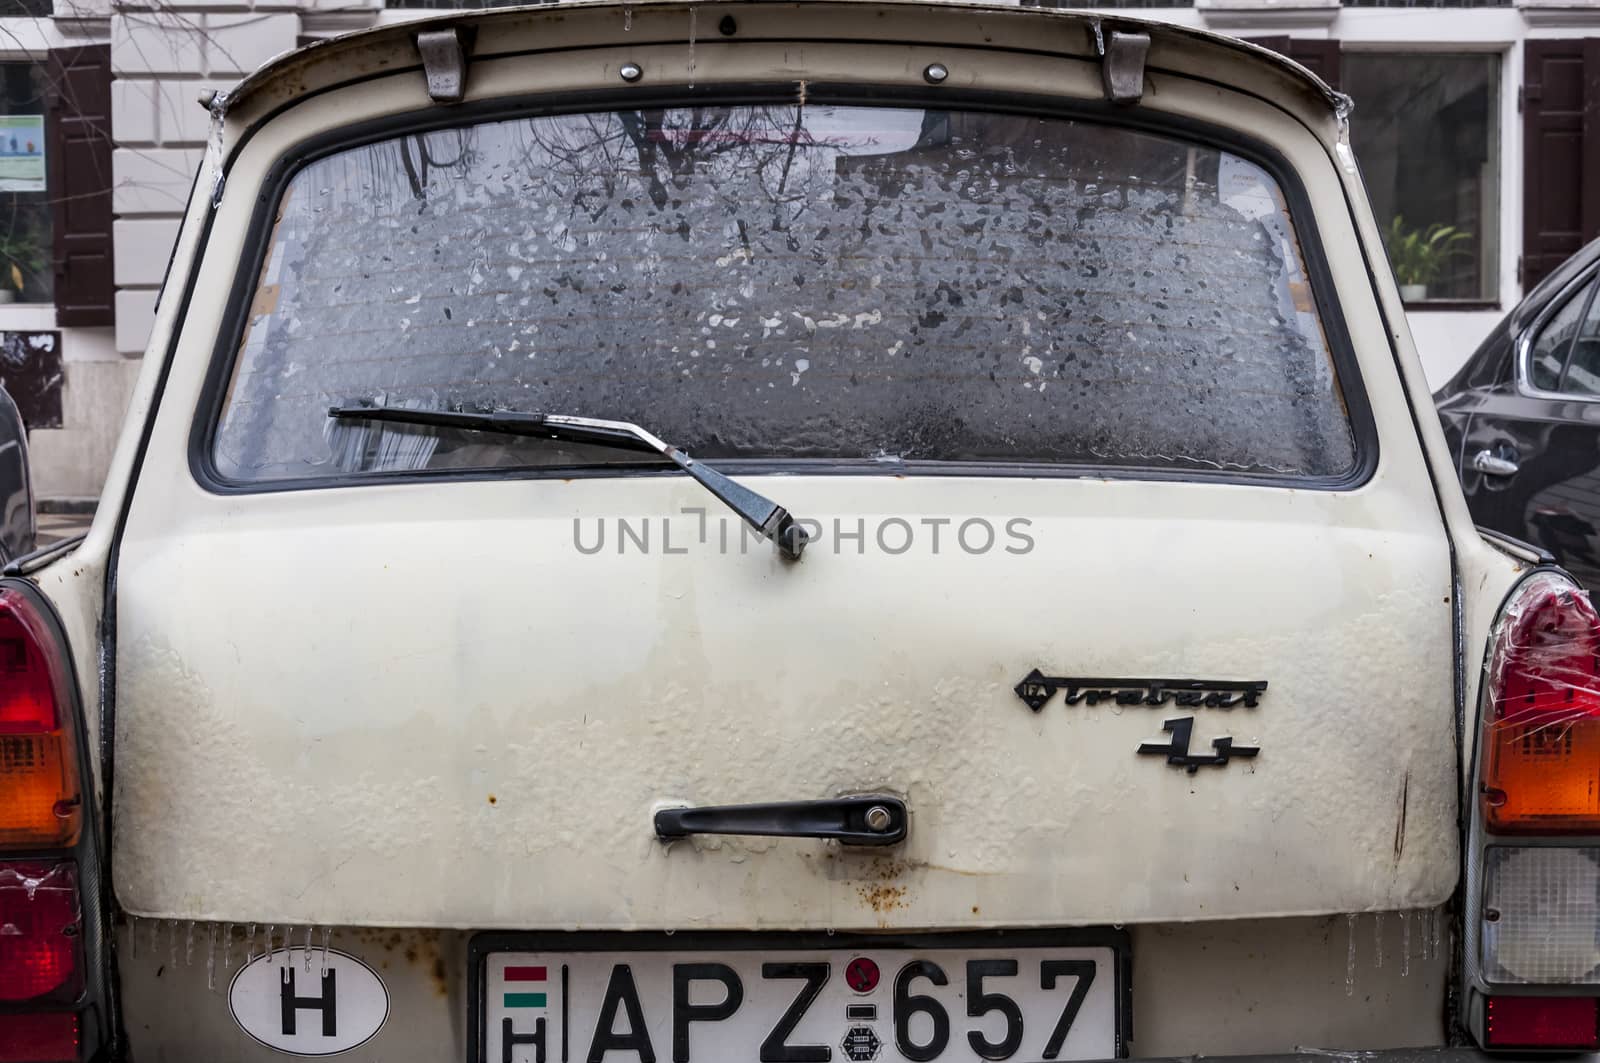 BUDAPEST - FEBRUARY 2: A Soviet-era Trabant car parked near St. Matthias Church on February 2, 2014 in Budapest, Hungary by edella